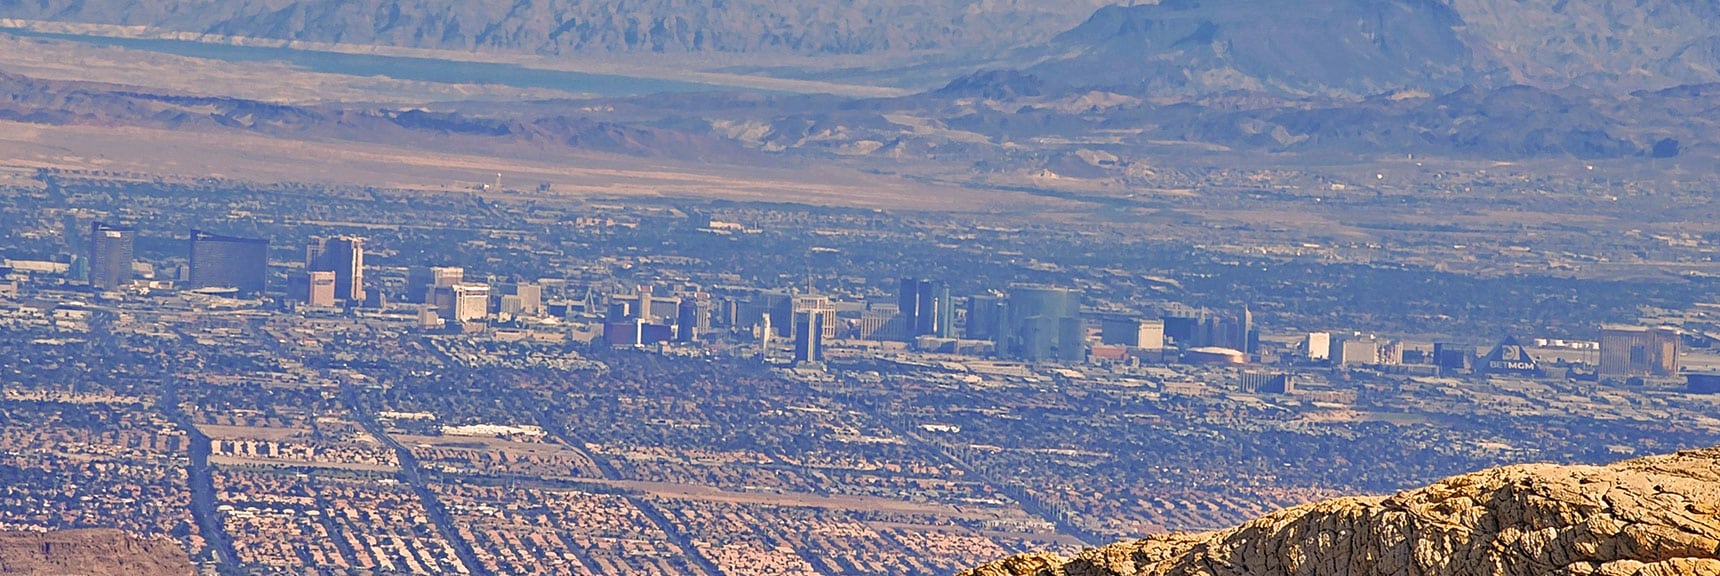 South End of Vegas Strip from North Peak | North Upper Crest Ridgeline | Rainbow Mountain Wilderness, Nevada